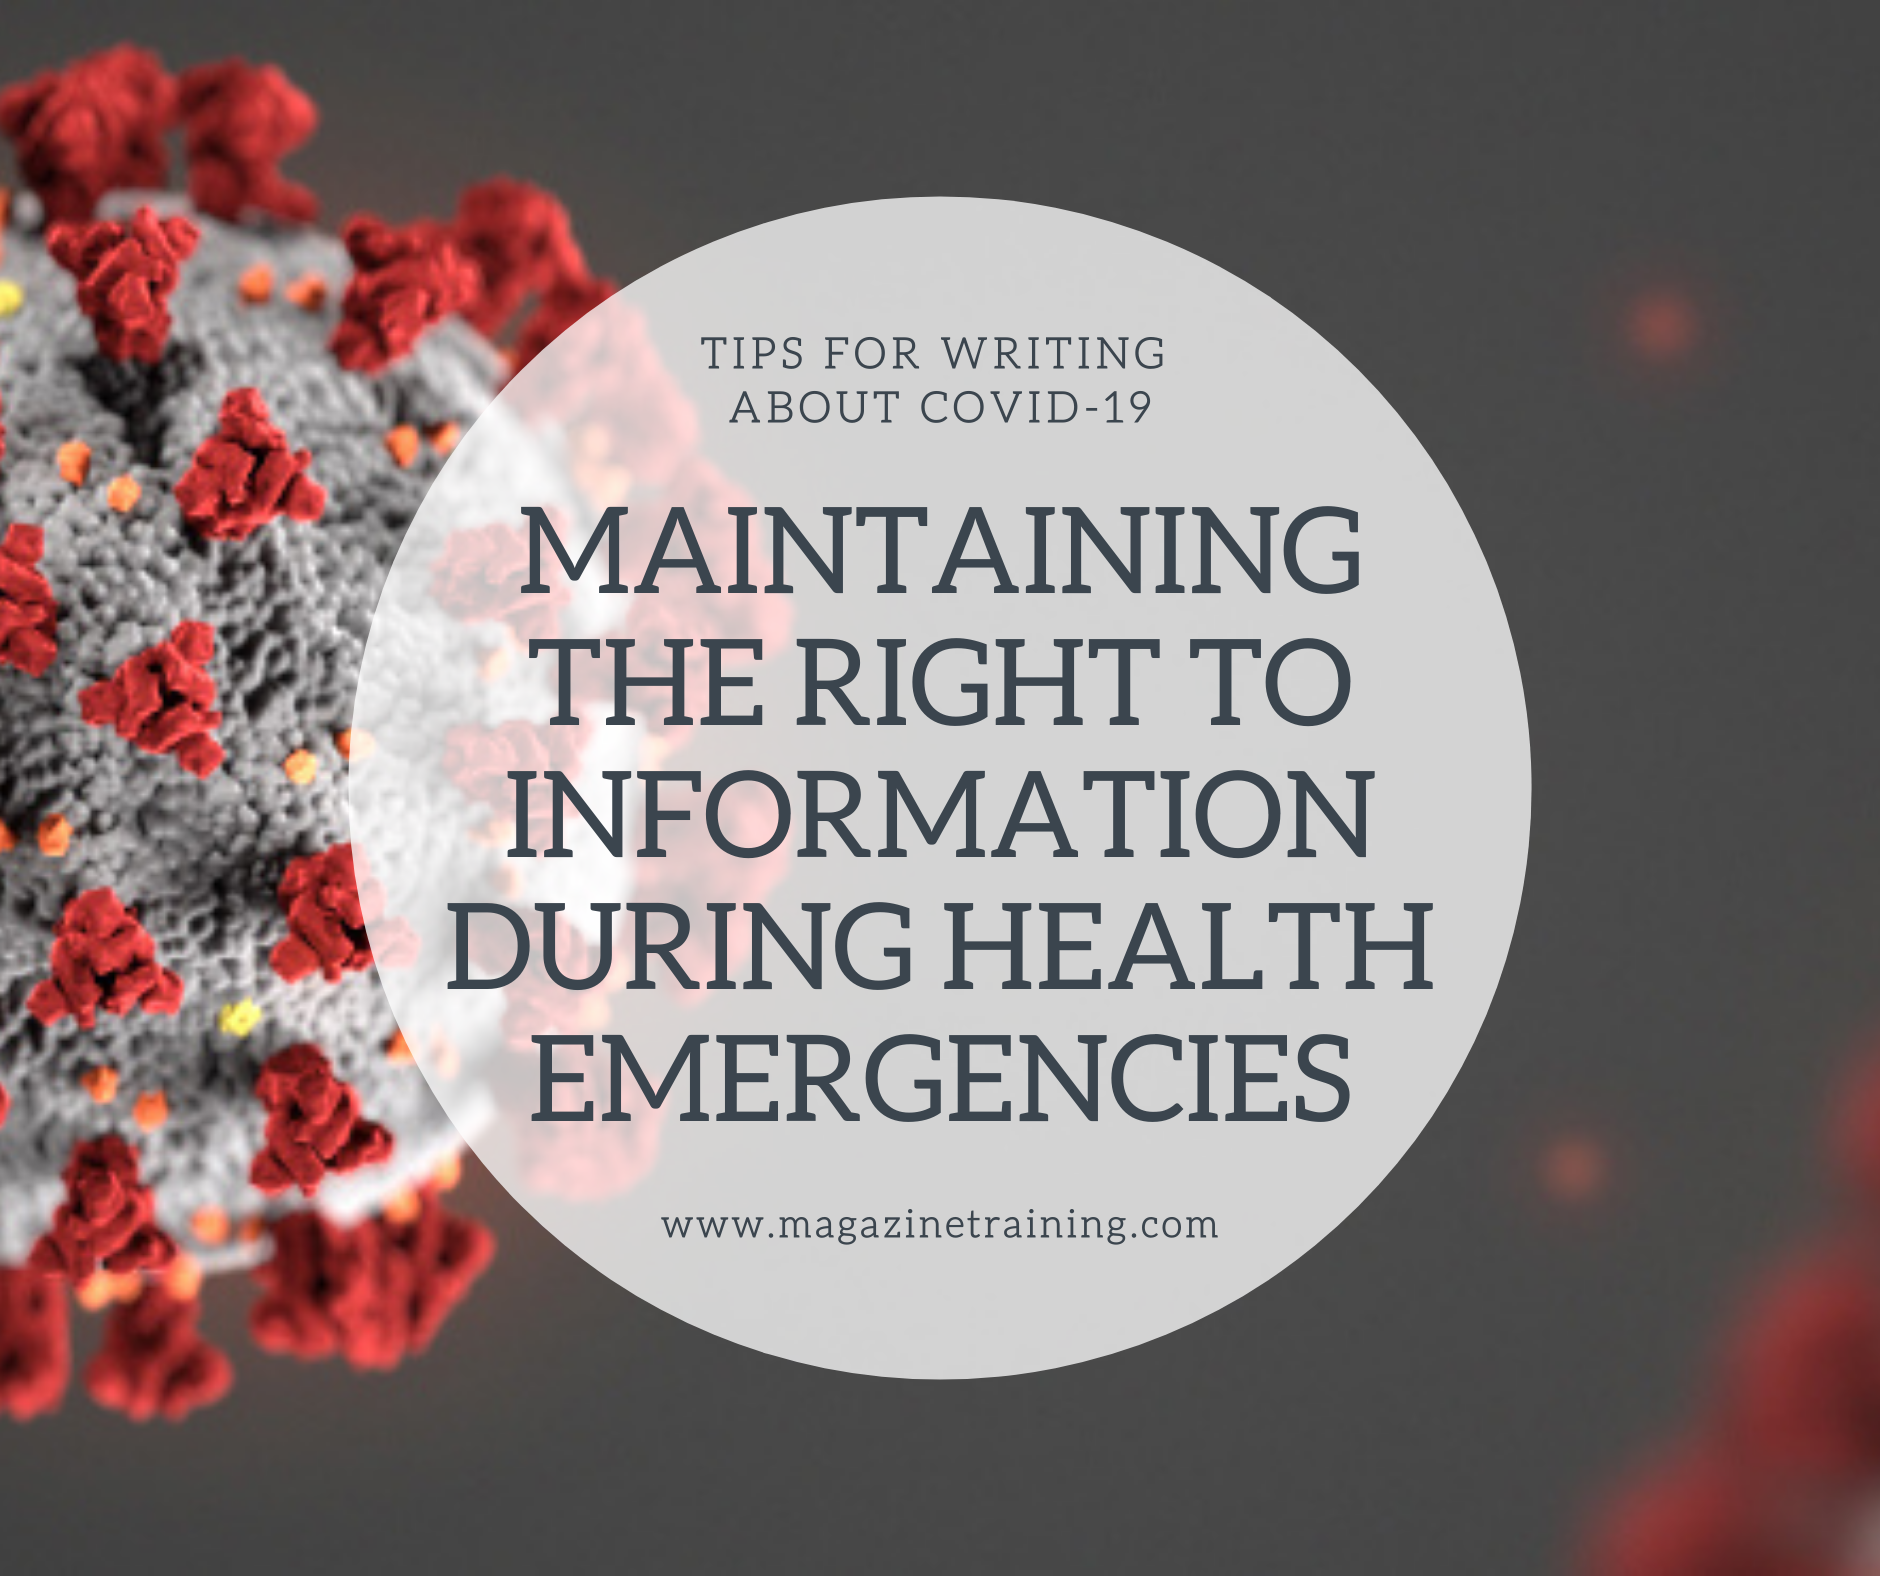 health information